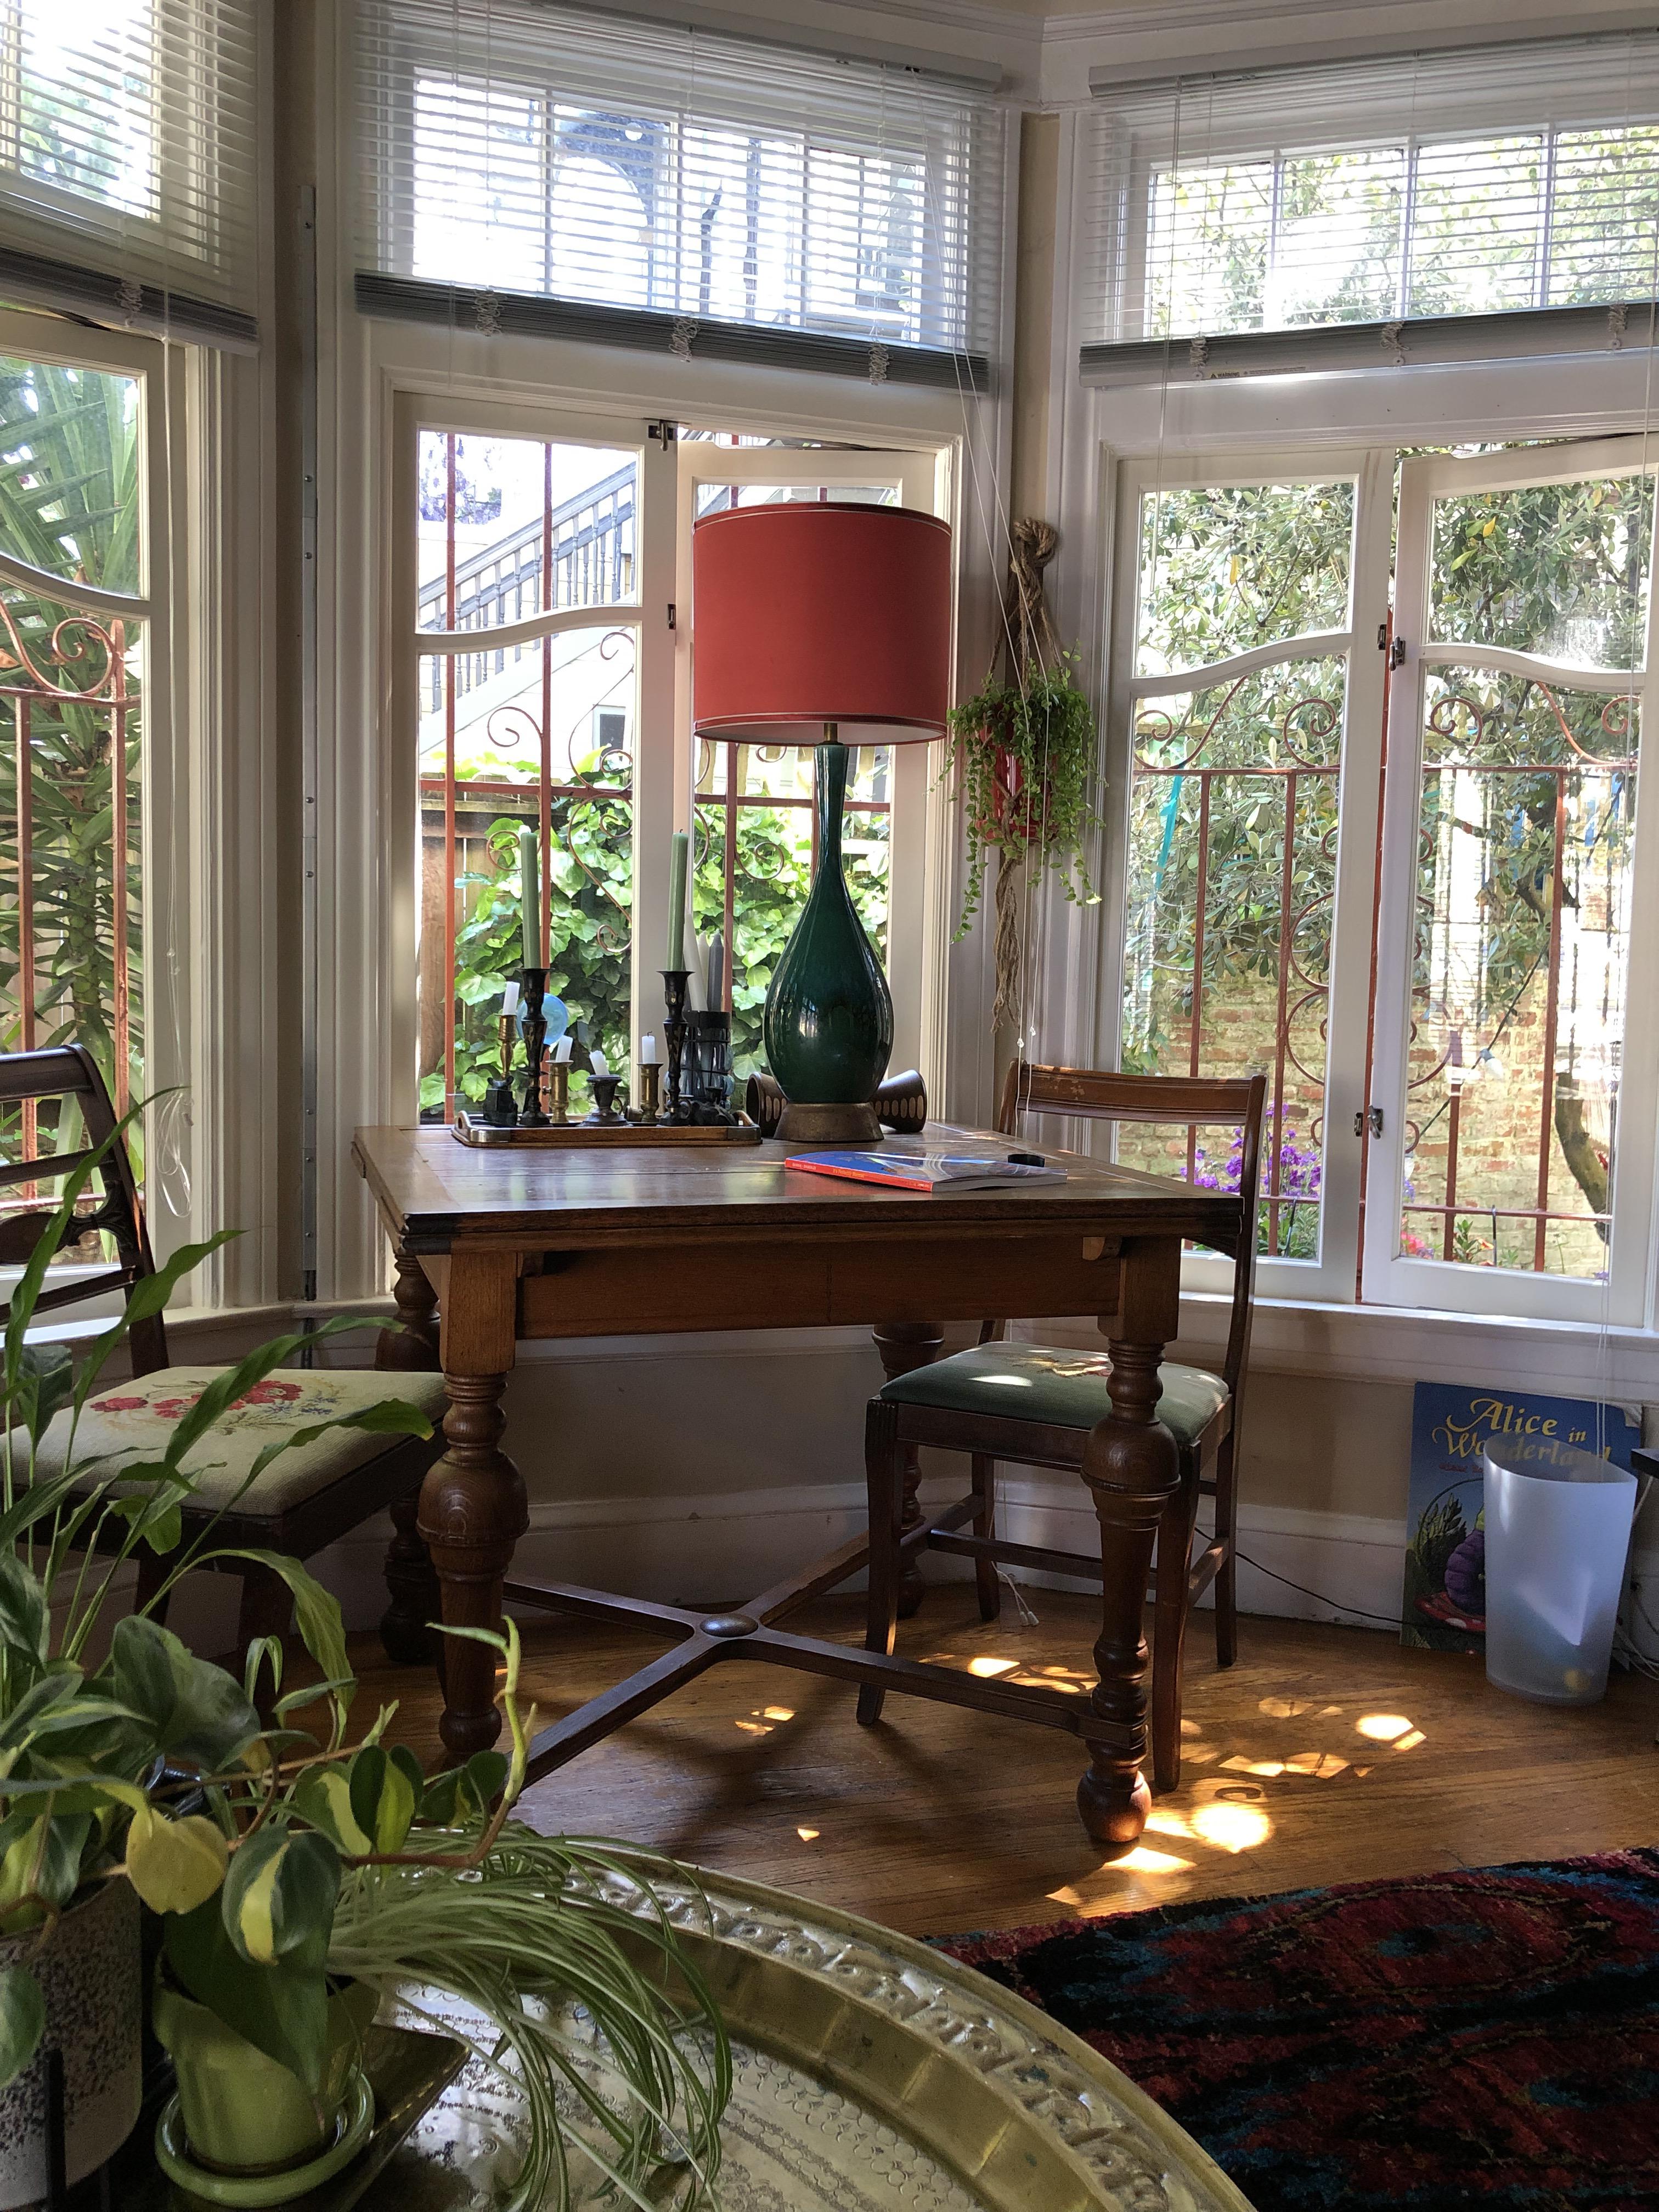 Simple Living Room Arrangement: Comfort And Coziness In Harmony